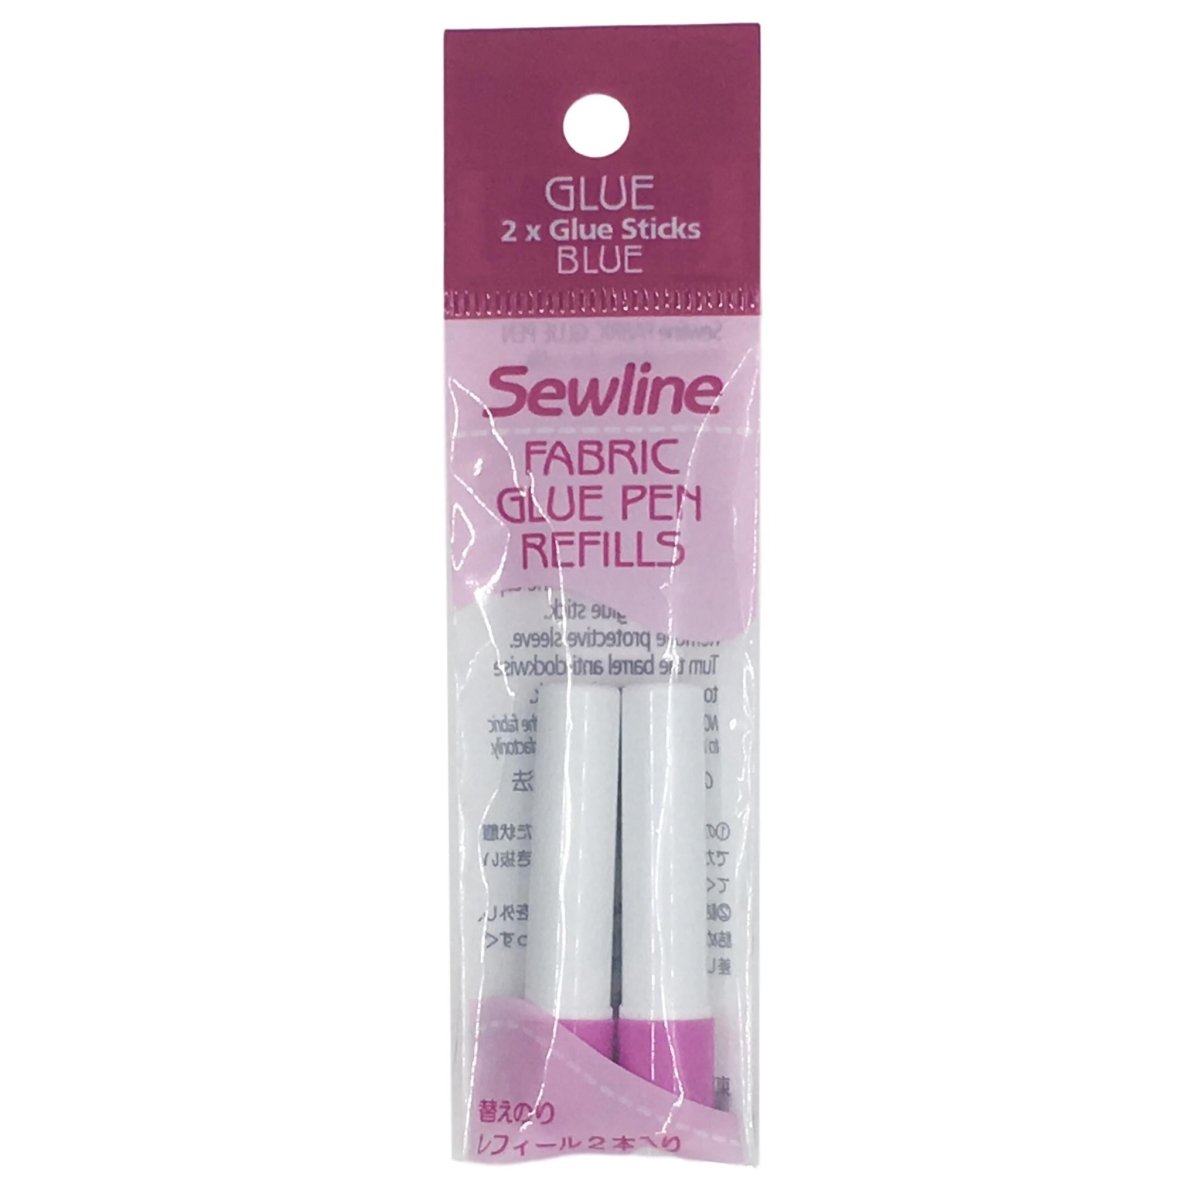 Sewline - Fabric Glue Pen REFILLS - Sewing Gem